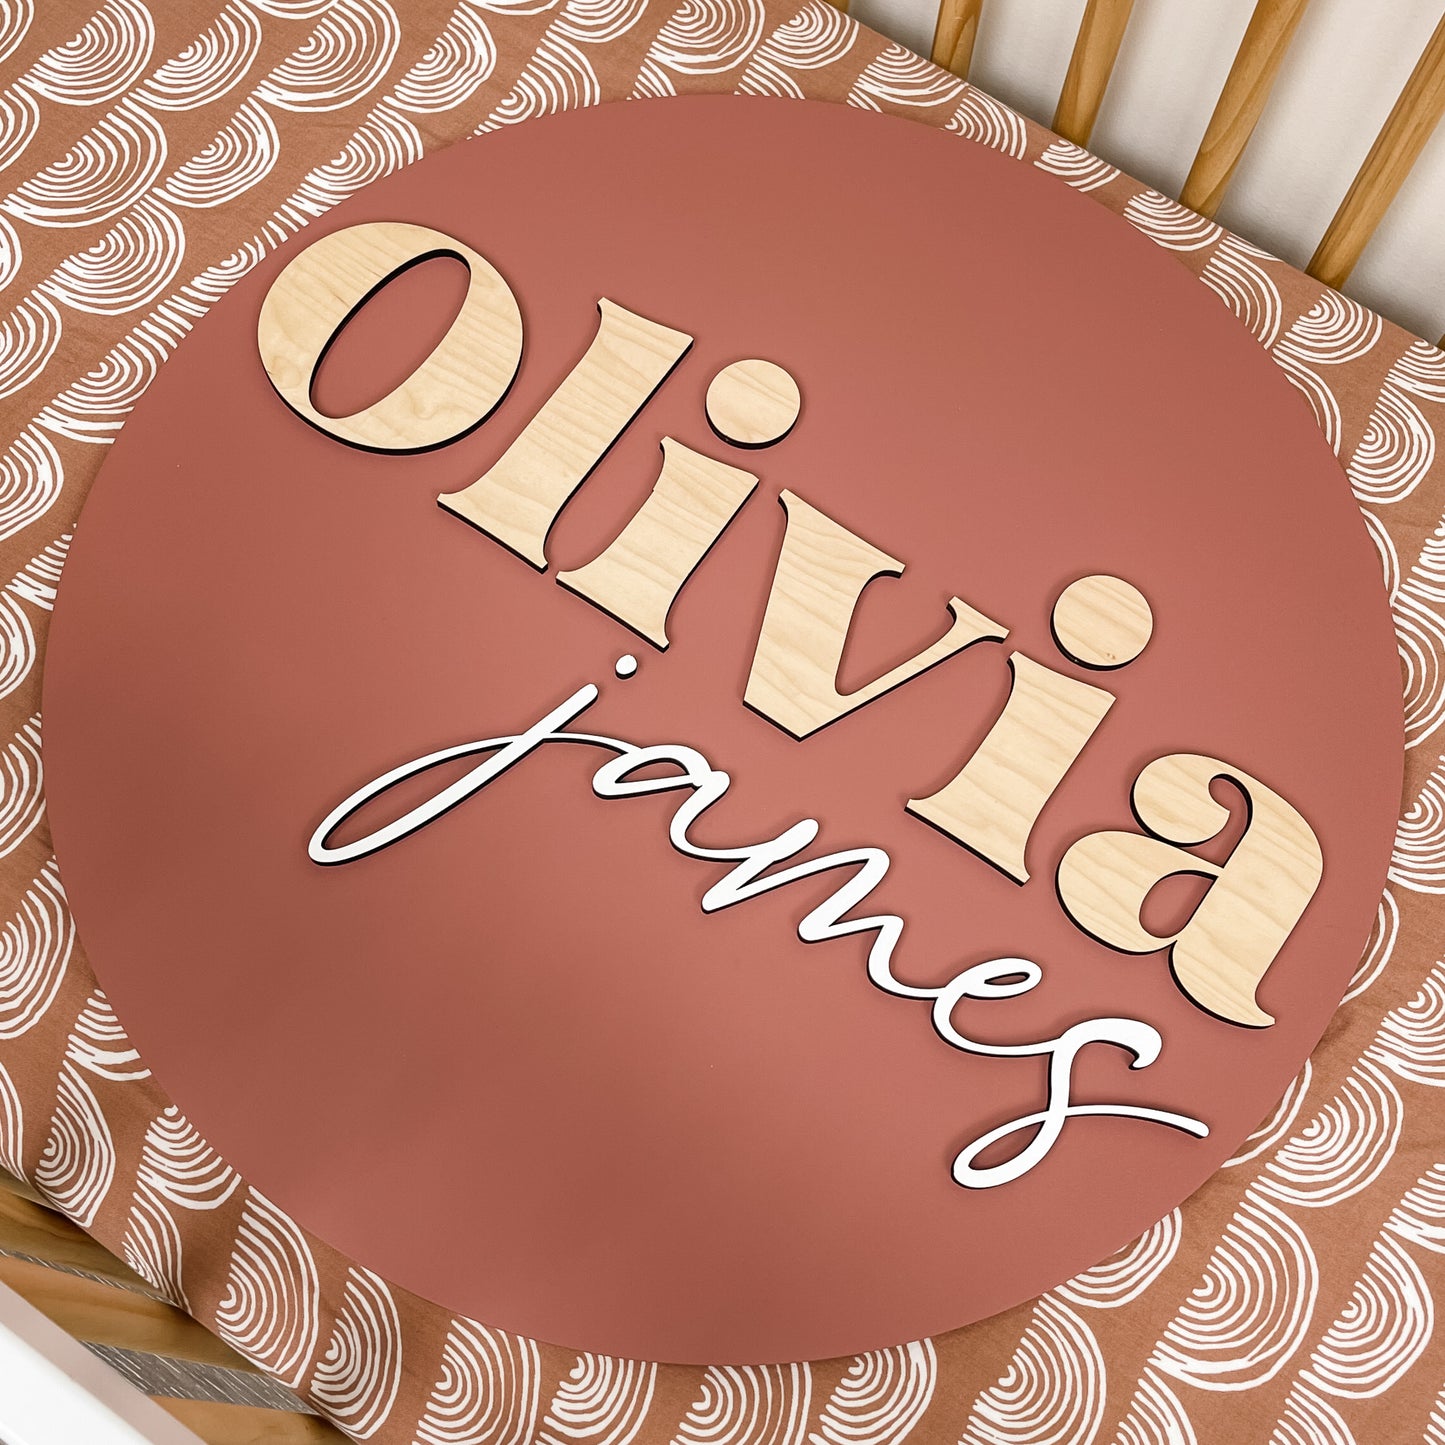 Olivia James Round Name Sign